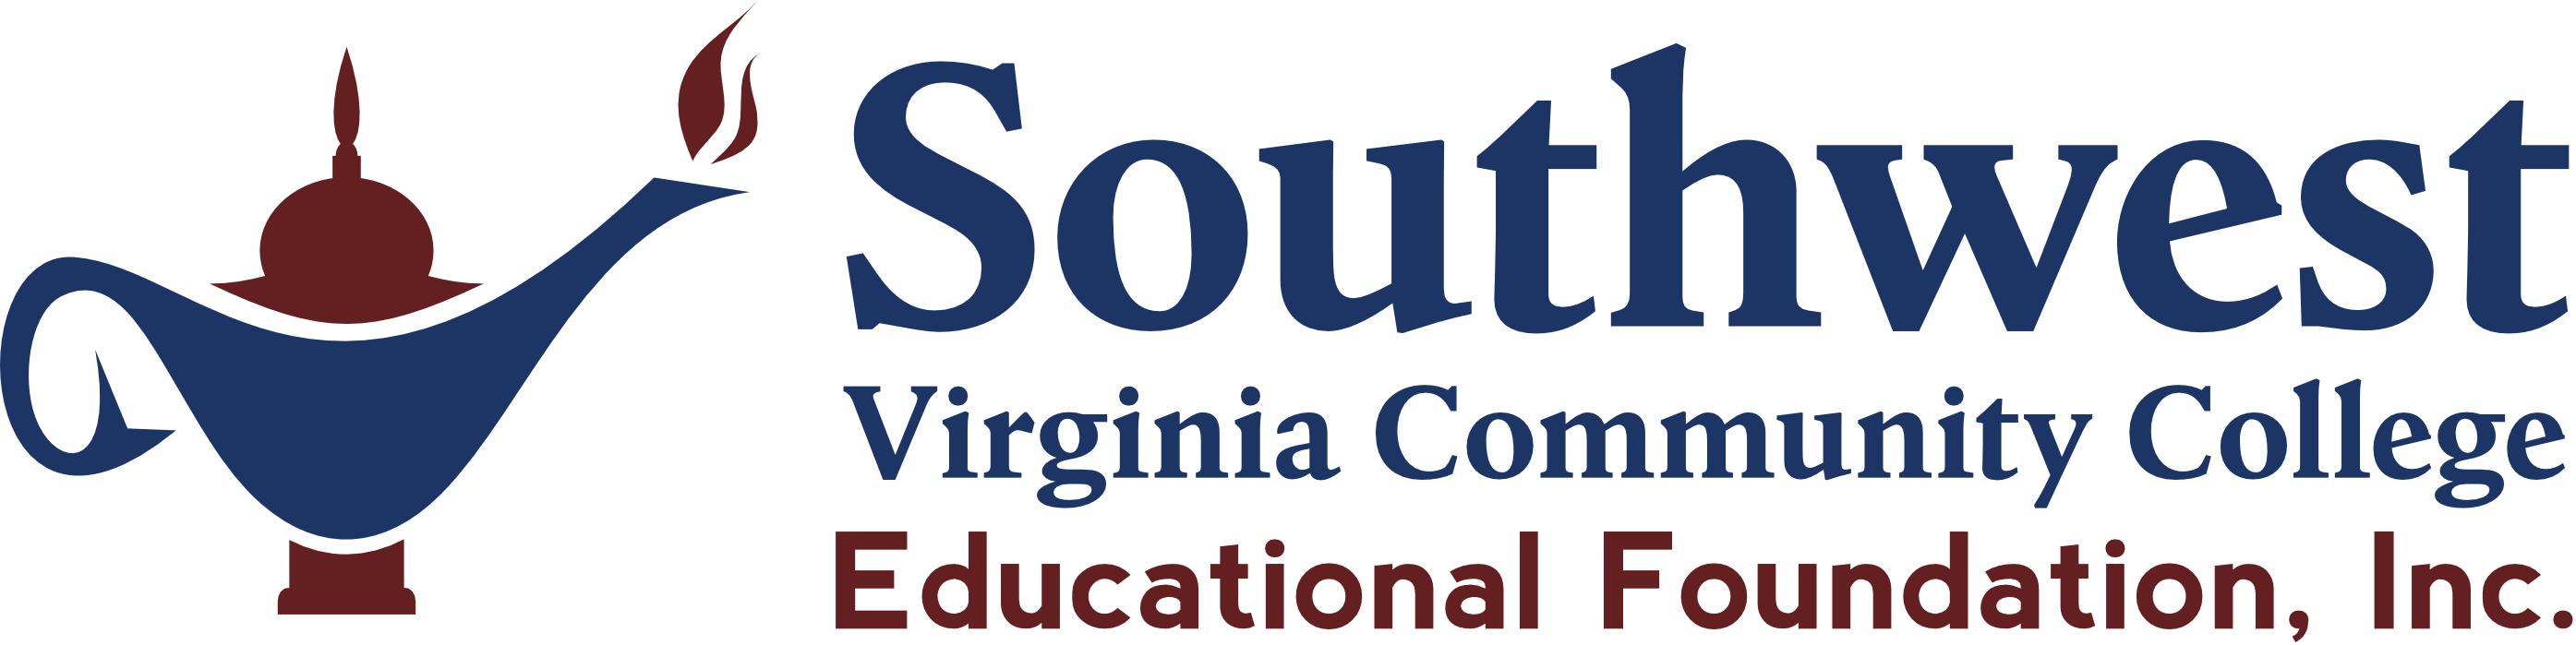 SWCC Educational Foundation, Inc.